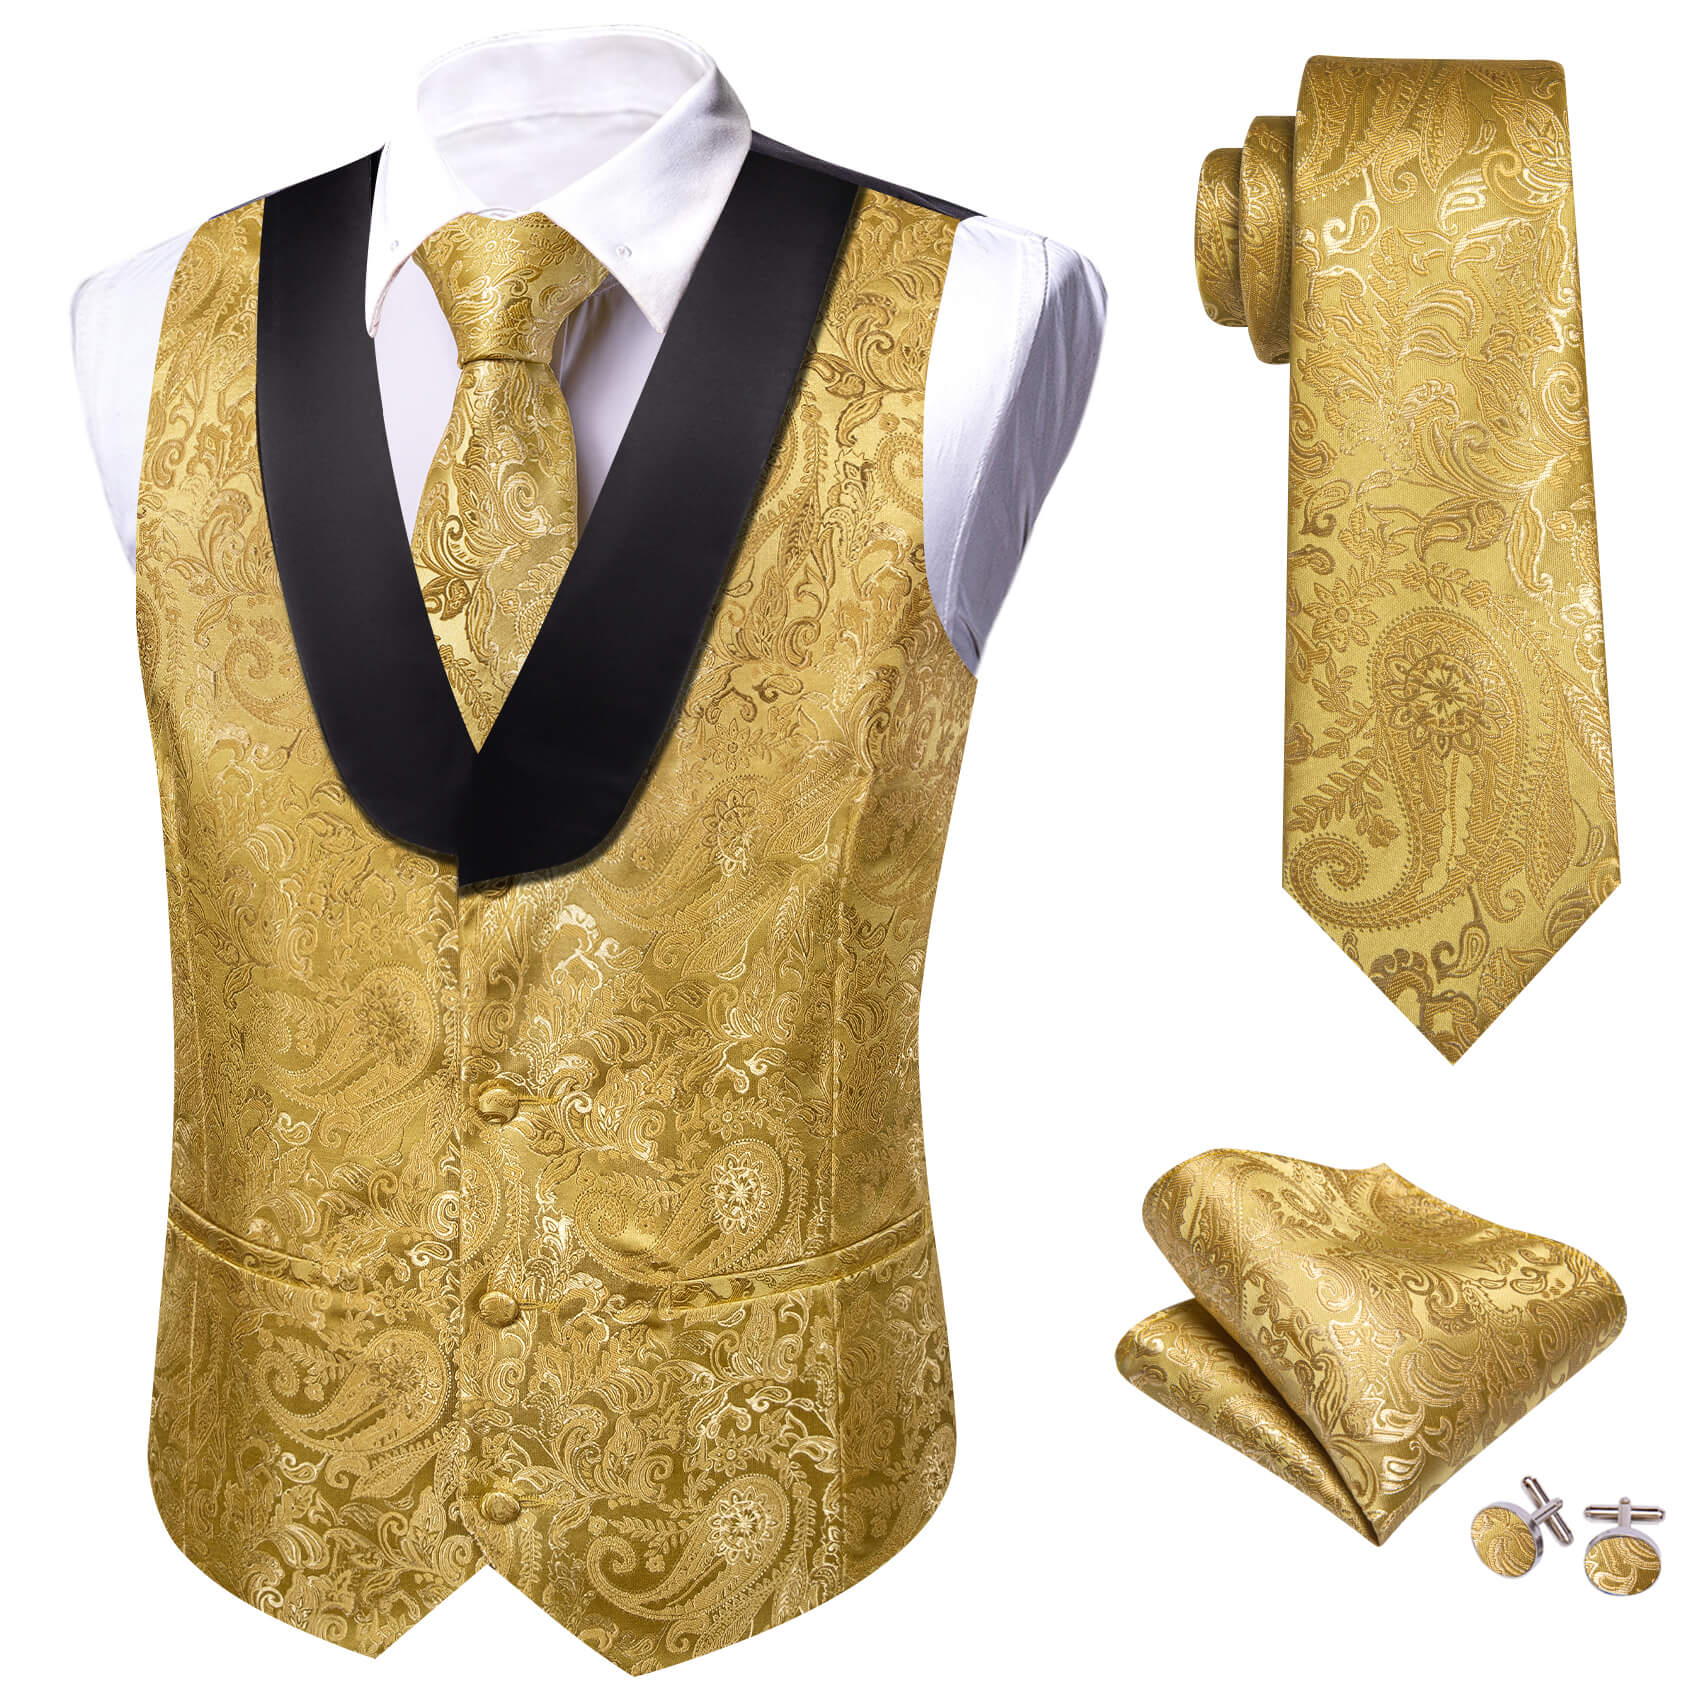 Barry.wang Men's Vest Gold Yellow Paisley Silk Shawl Collar Vest Tie Set